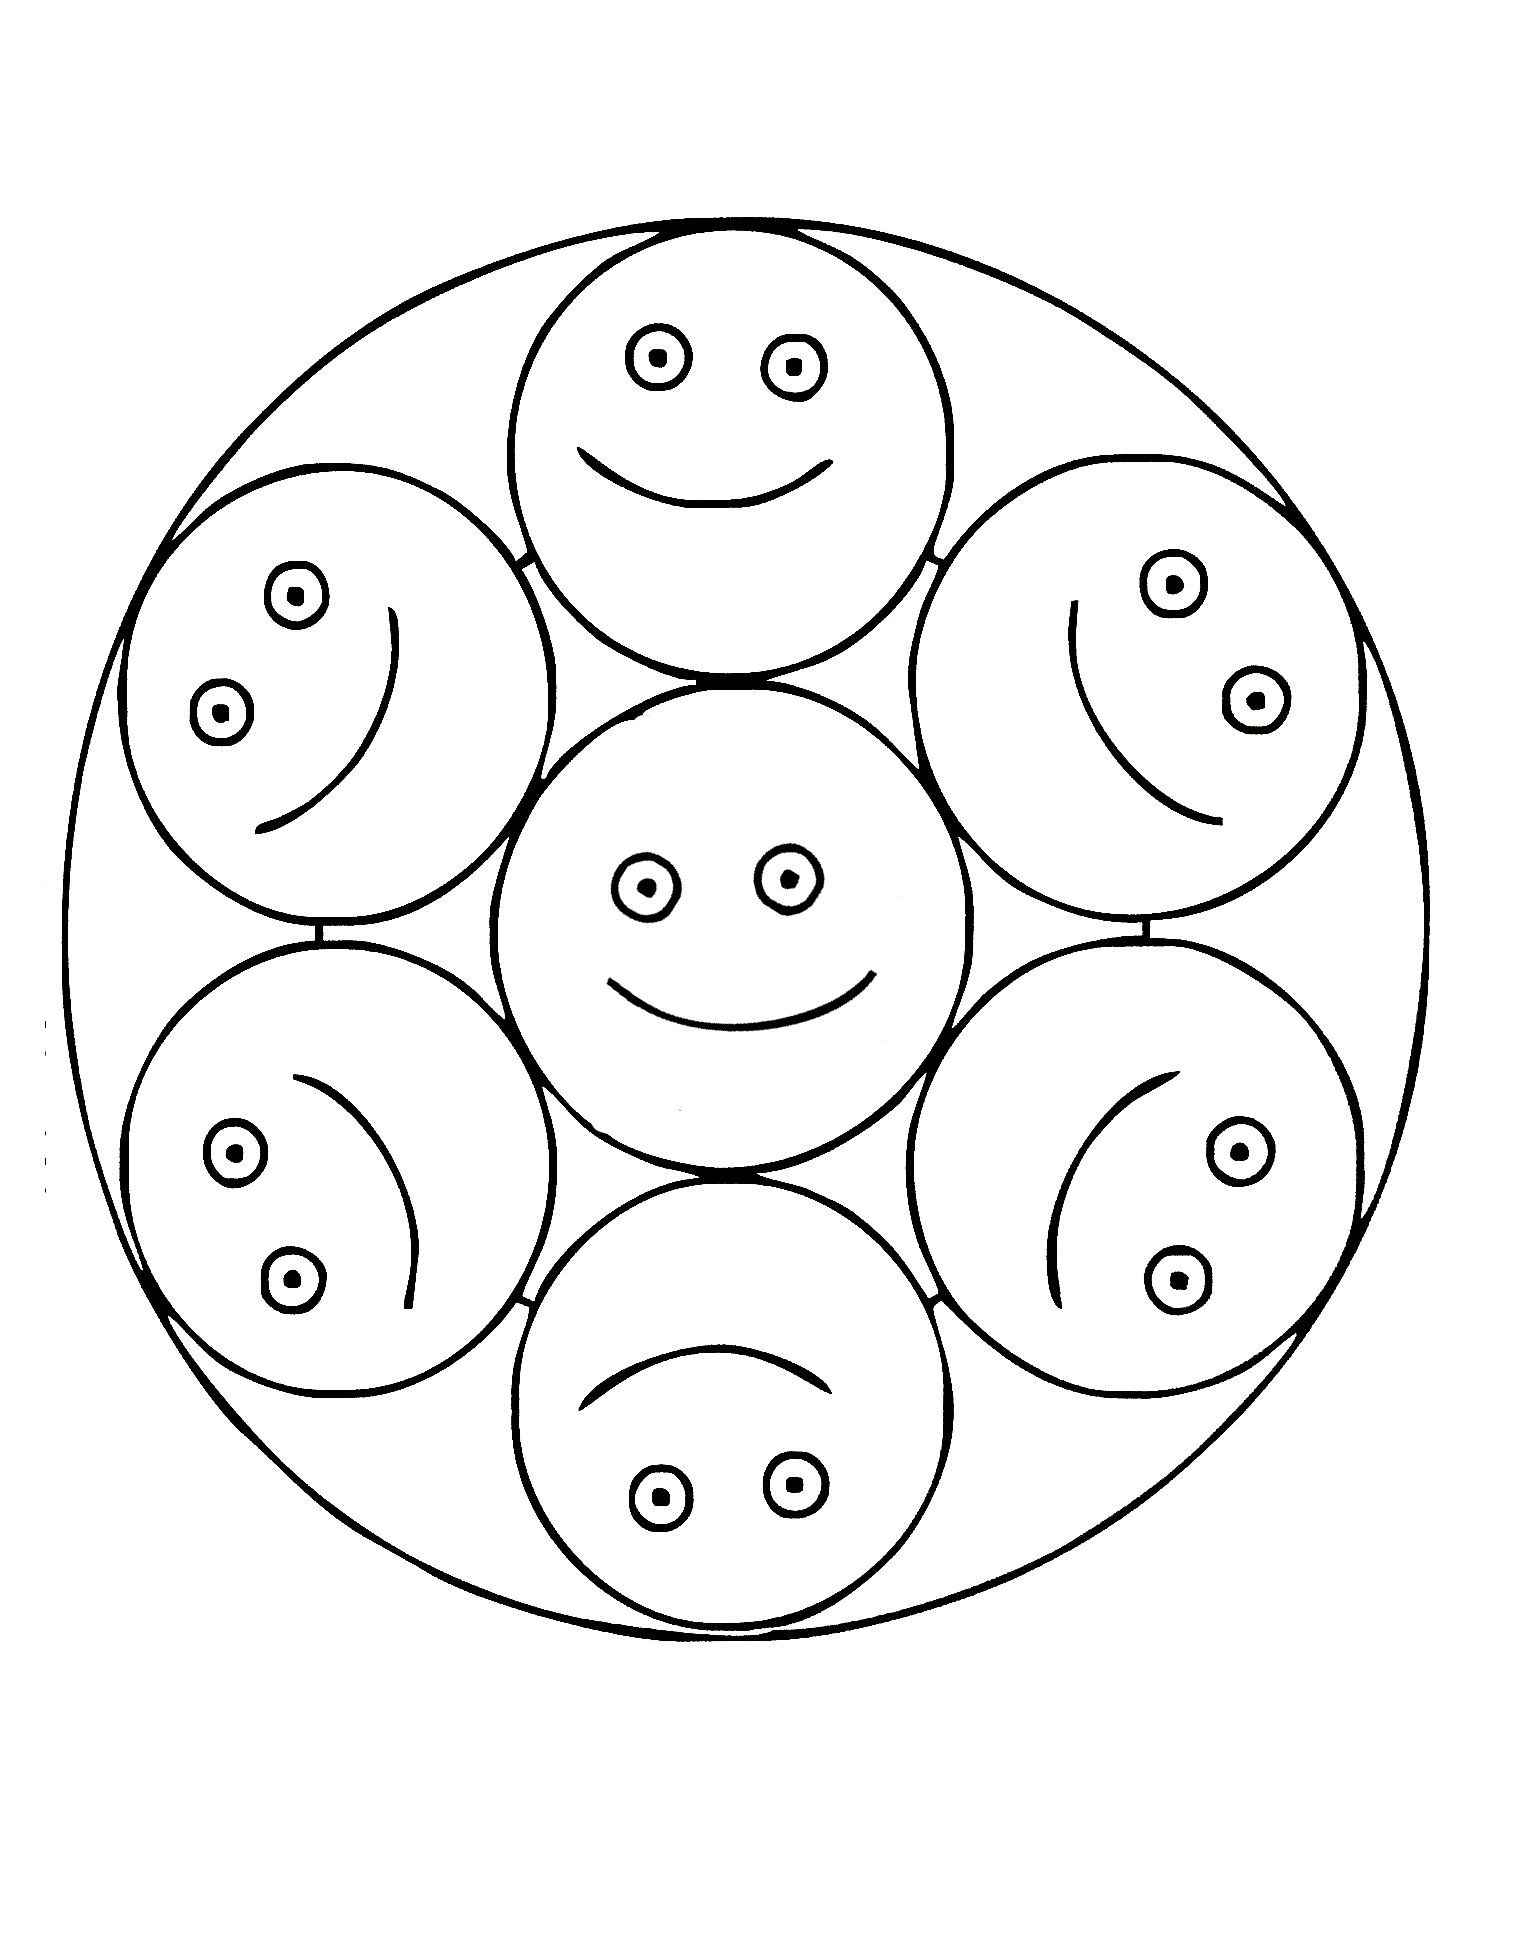 Sehr einfaches Mandala mit Smileys